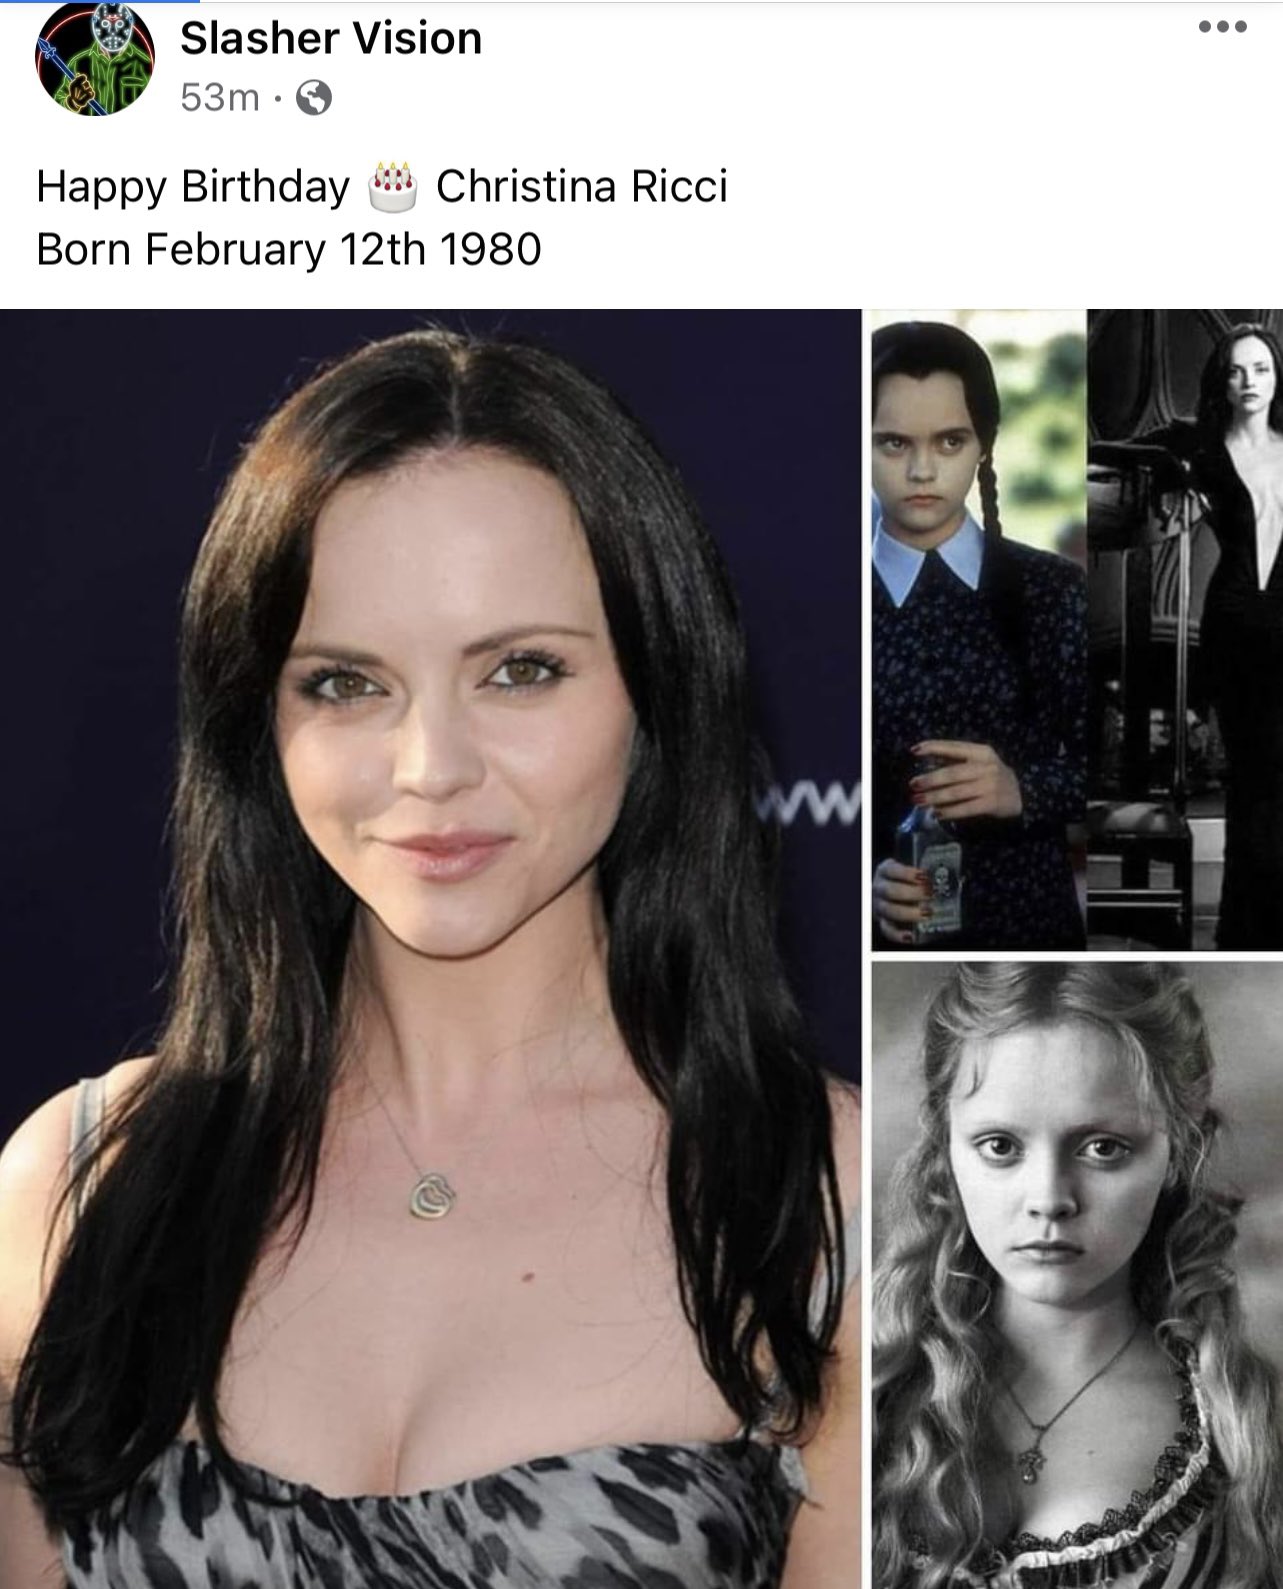  and happy birthday to Christina Ricci! 